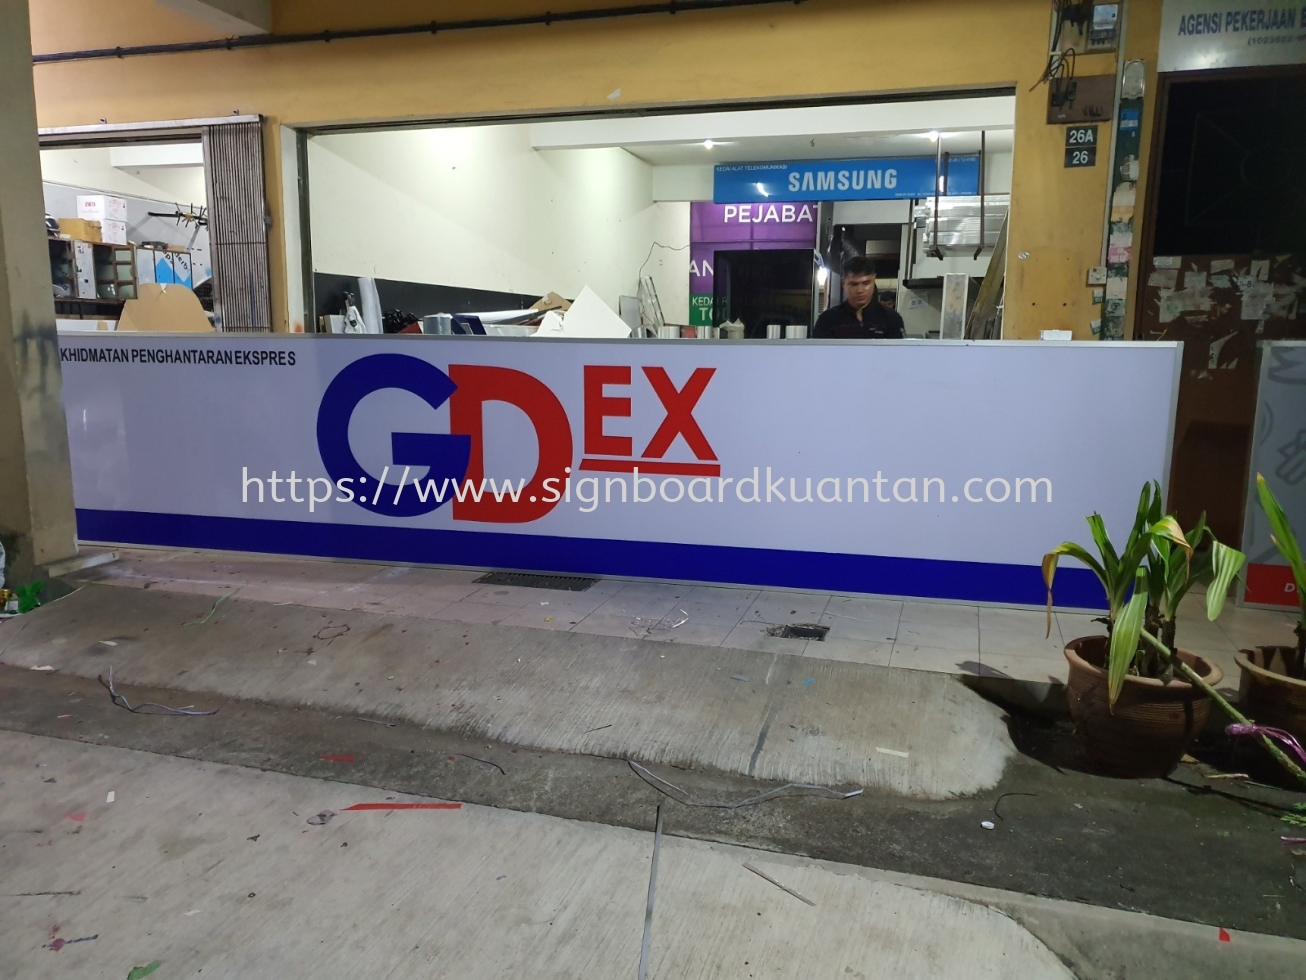 GDEX EXPRESS LIGHTBOX SIGNBOARD AT KUANTAN TAMAN MEWAH 